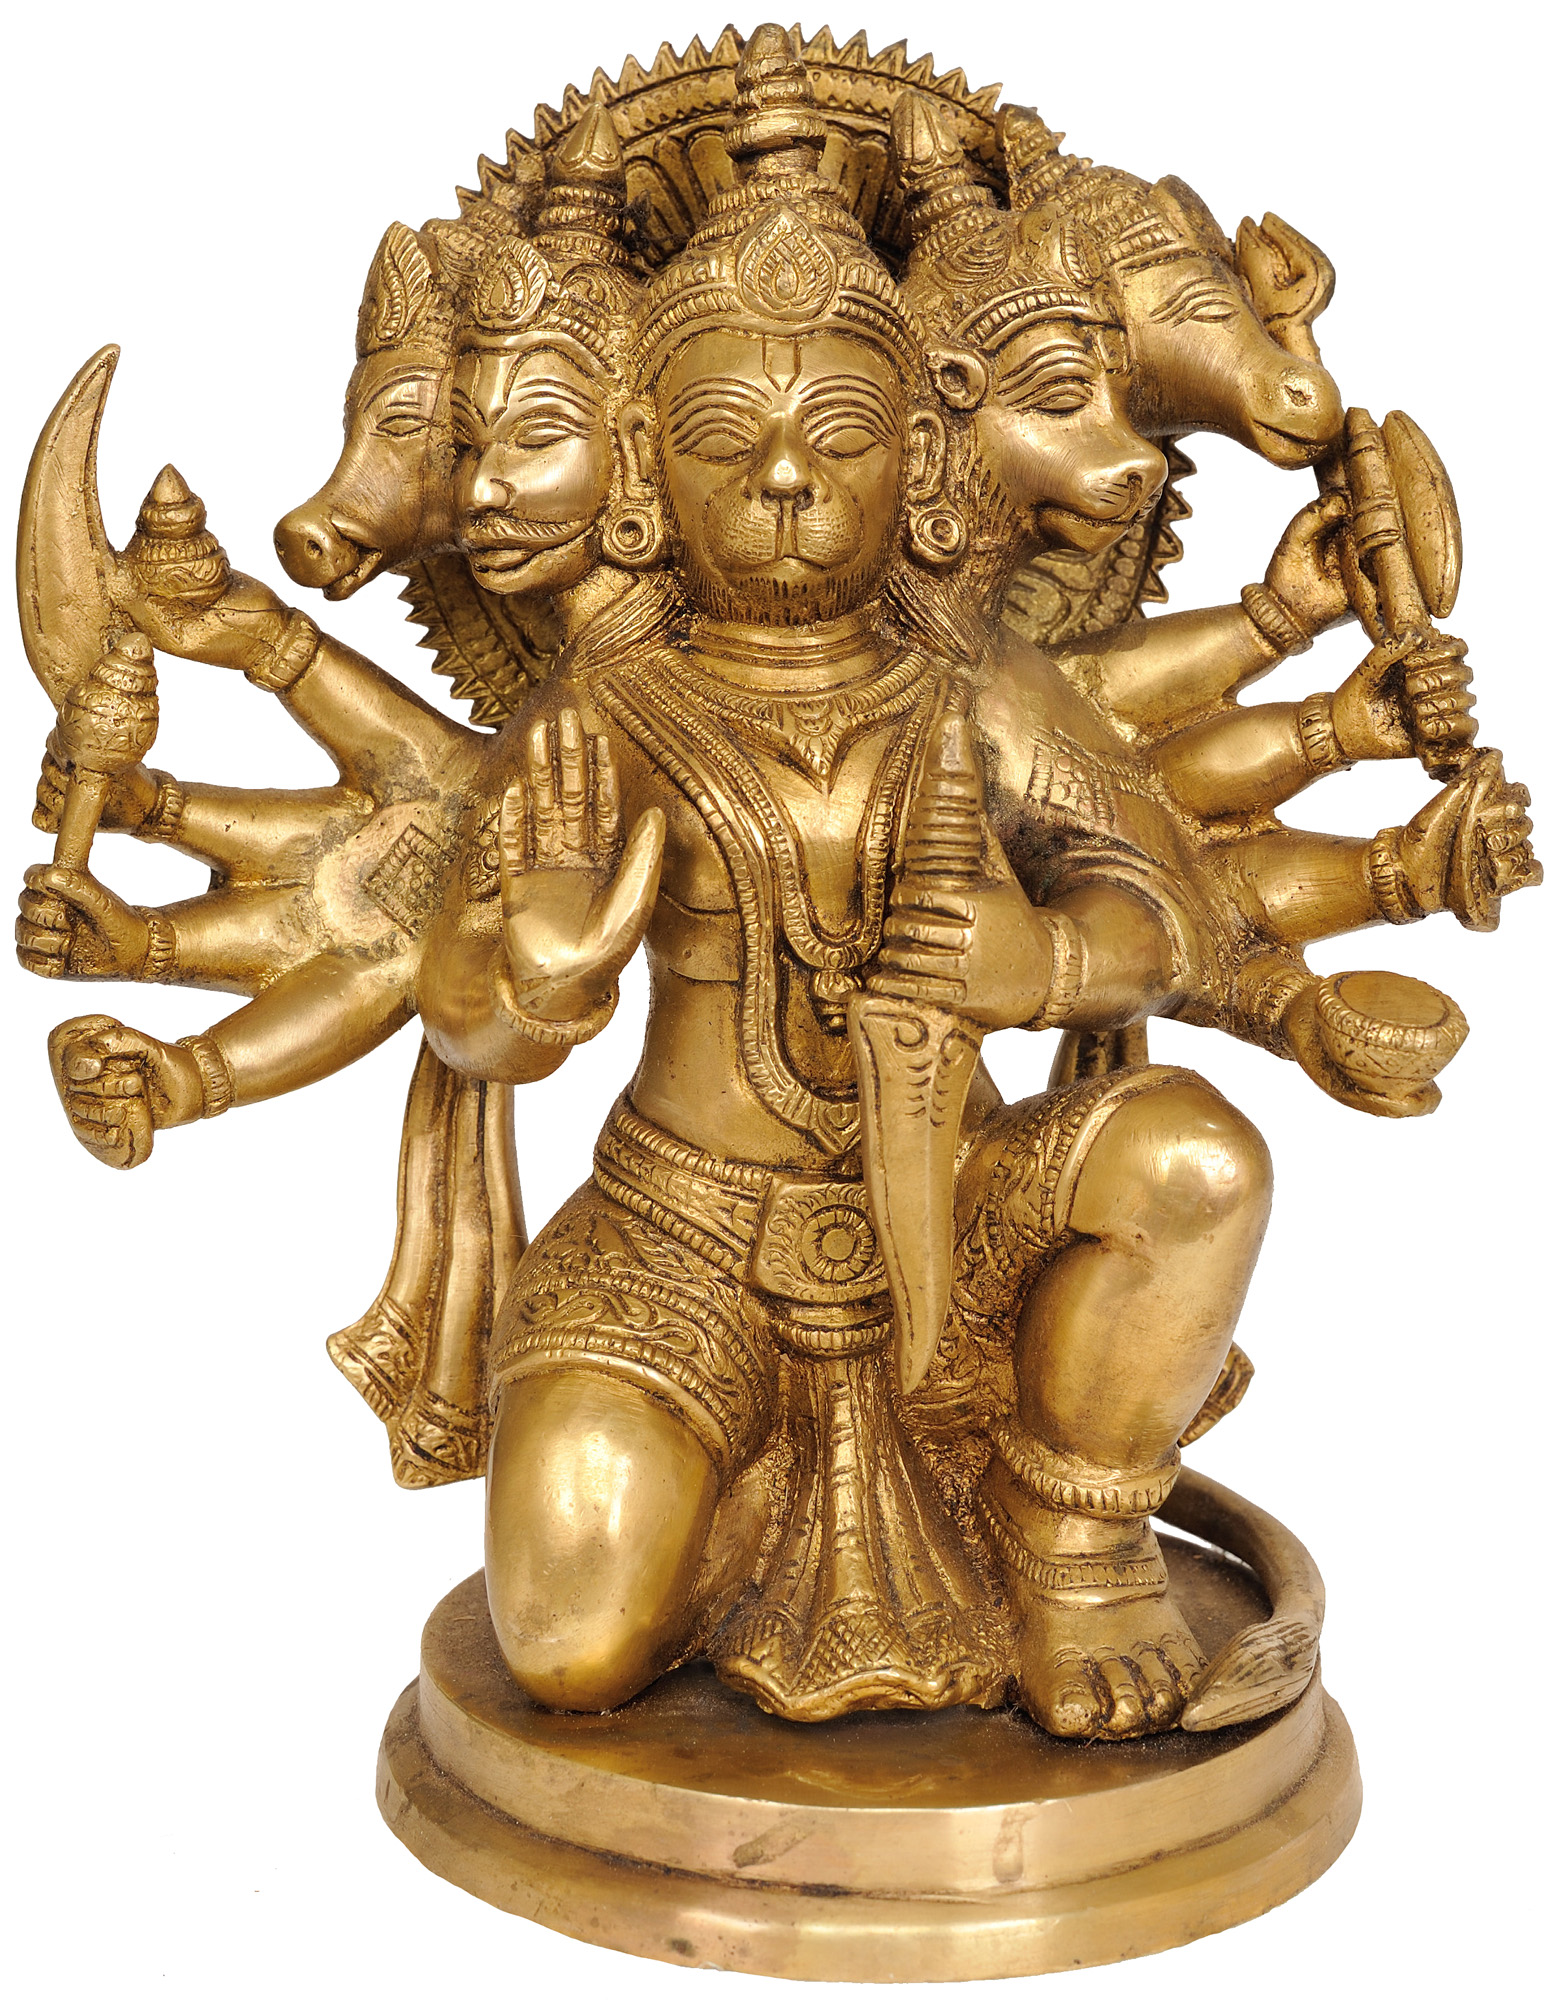 Five-Headed Lord Hanuman